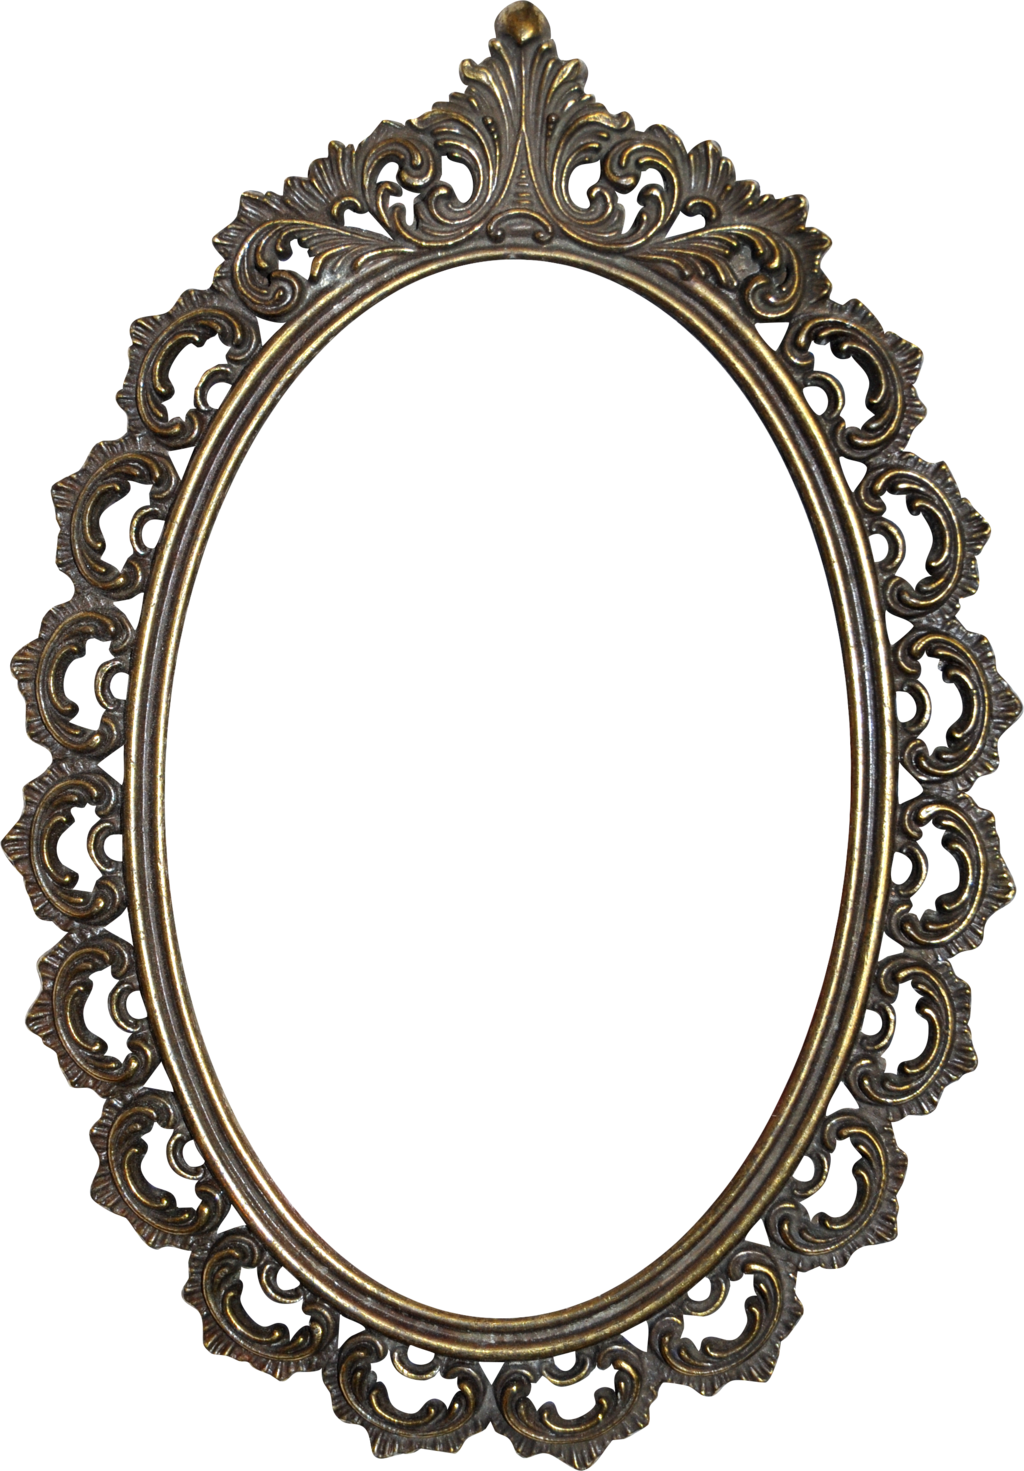 mirror, frame favourites smzhh deviantart #26359